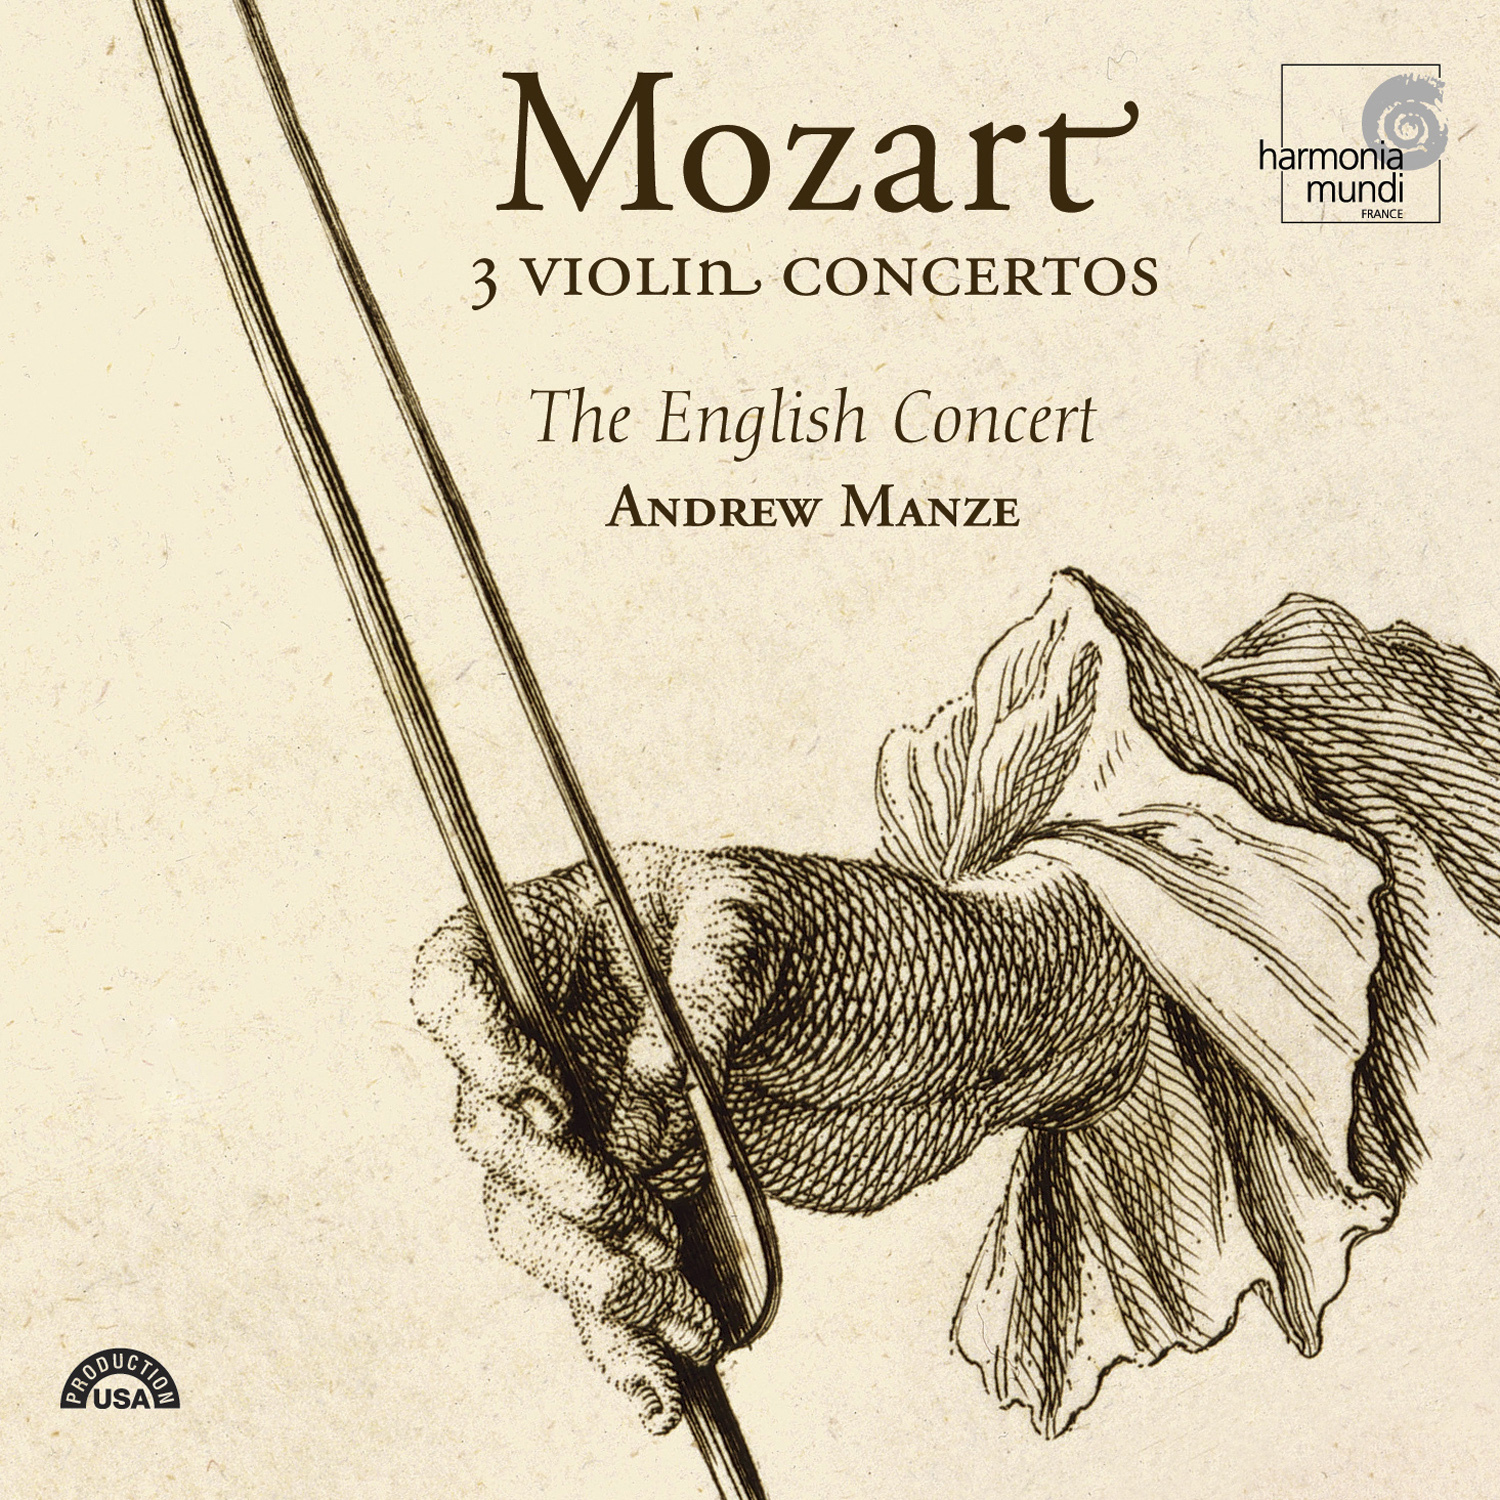 Violin Concerto No. 4 in D major, K. 218: I. Allegro